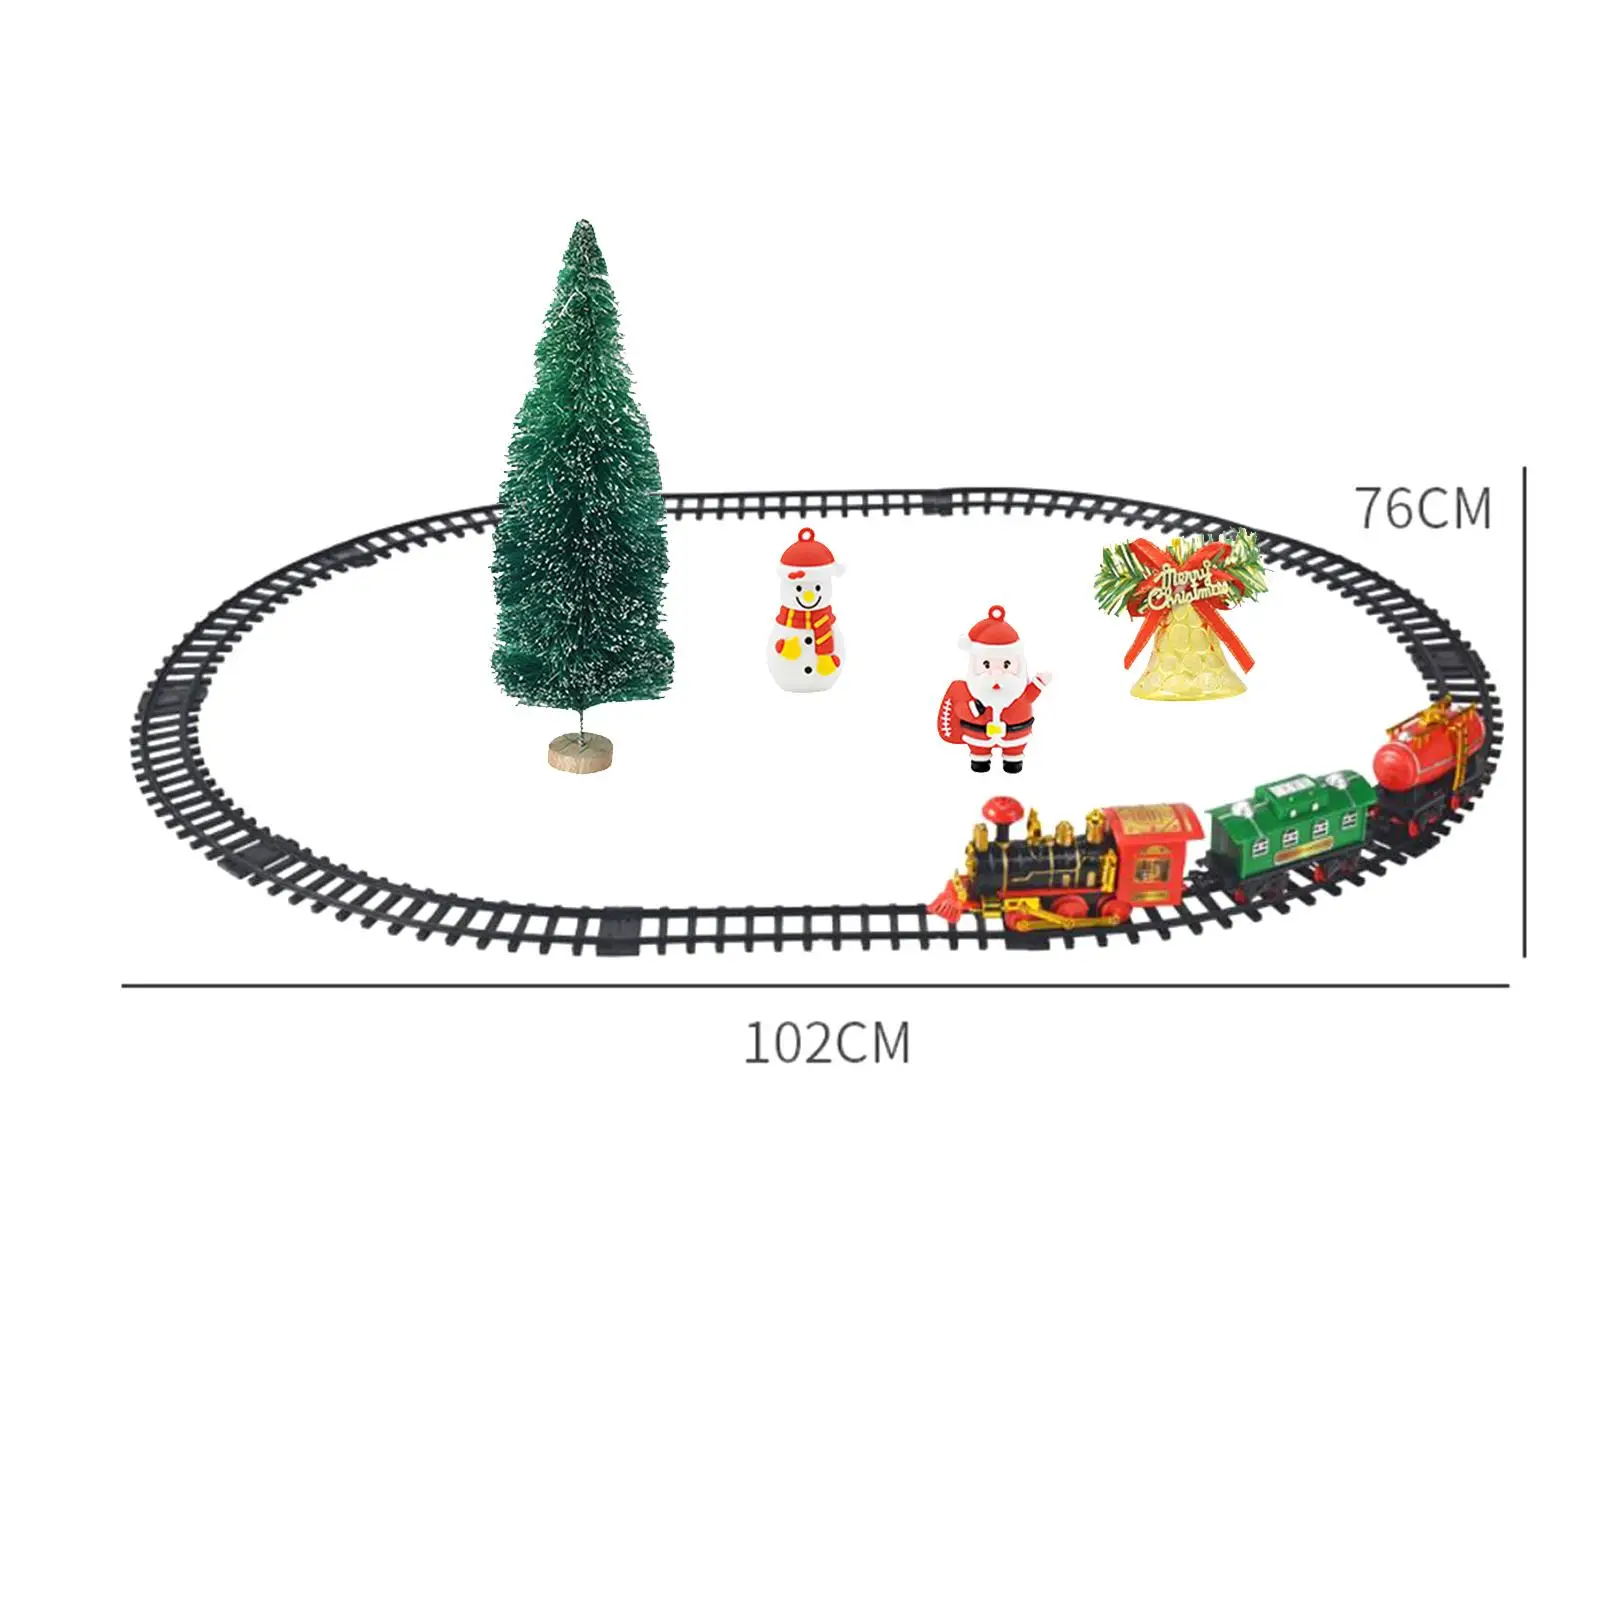 Train Set Train Toys Railroad Kits Educational Toy for Preschool Learning